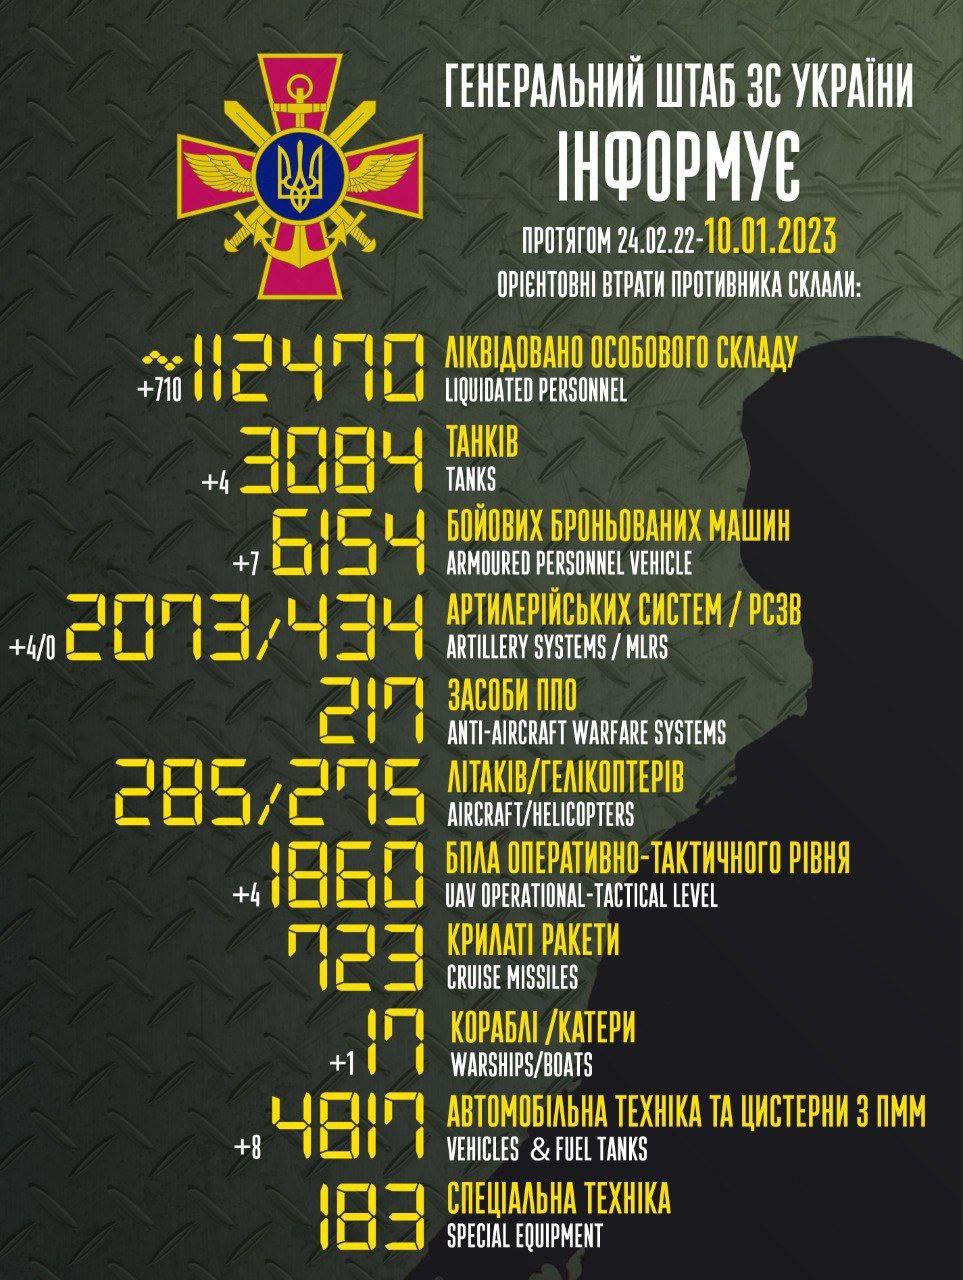 Russia’s losses in Ukraine as of 10/01/2023